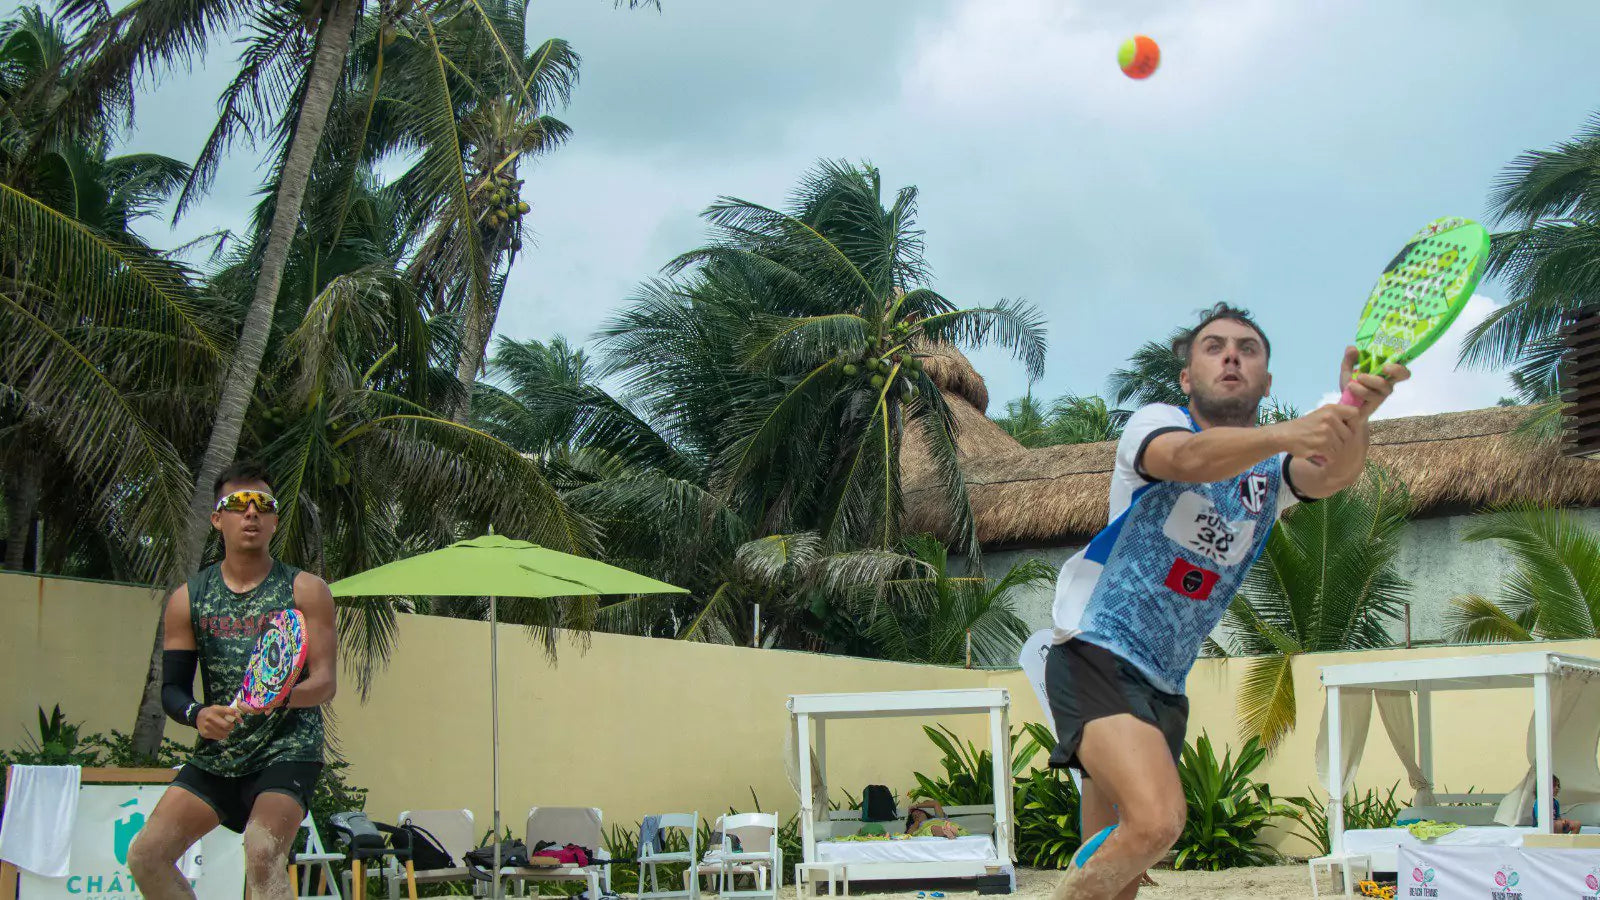 How to play beach tennis – iamBeachTennis